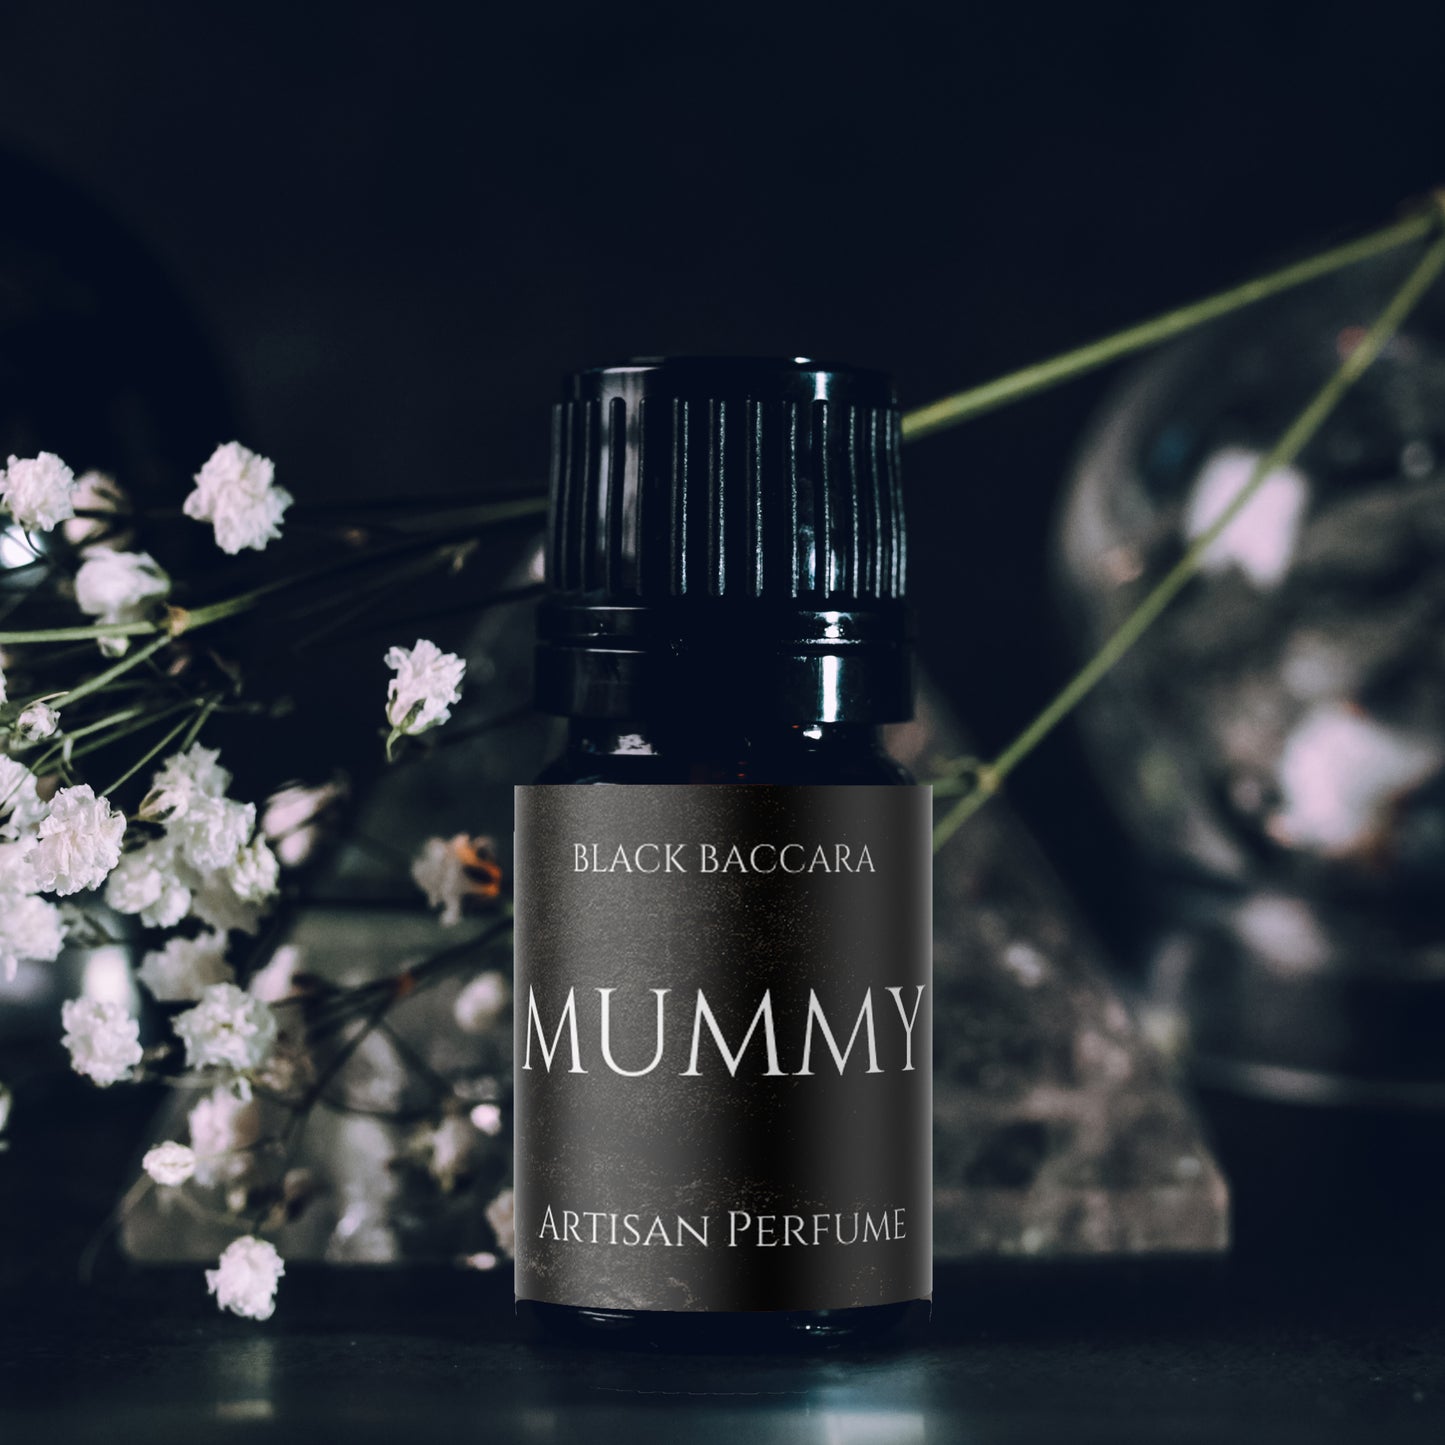 Mummy perfume